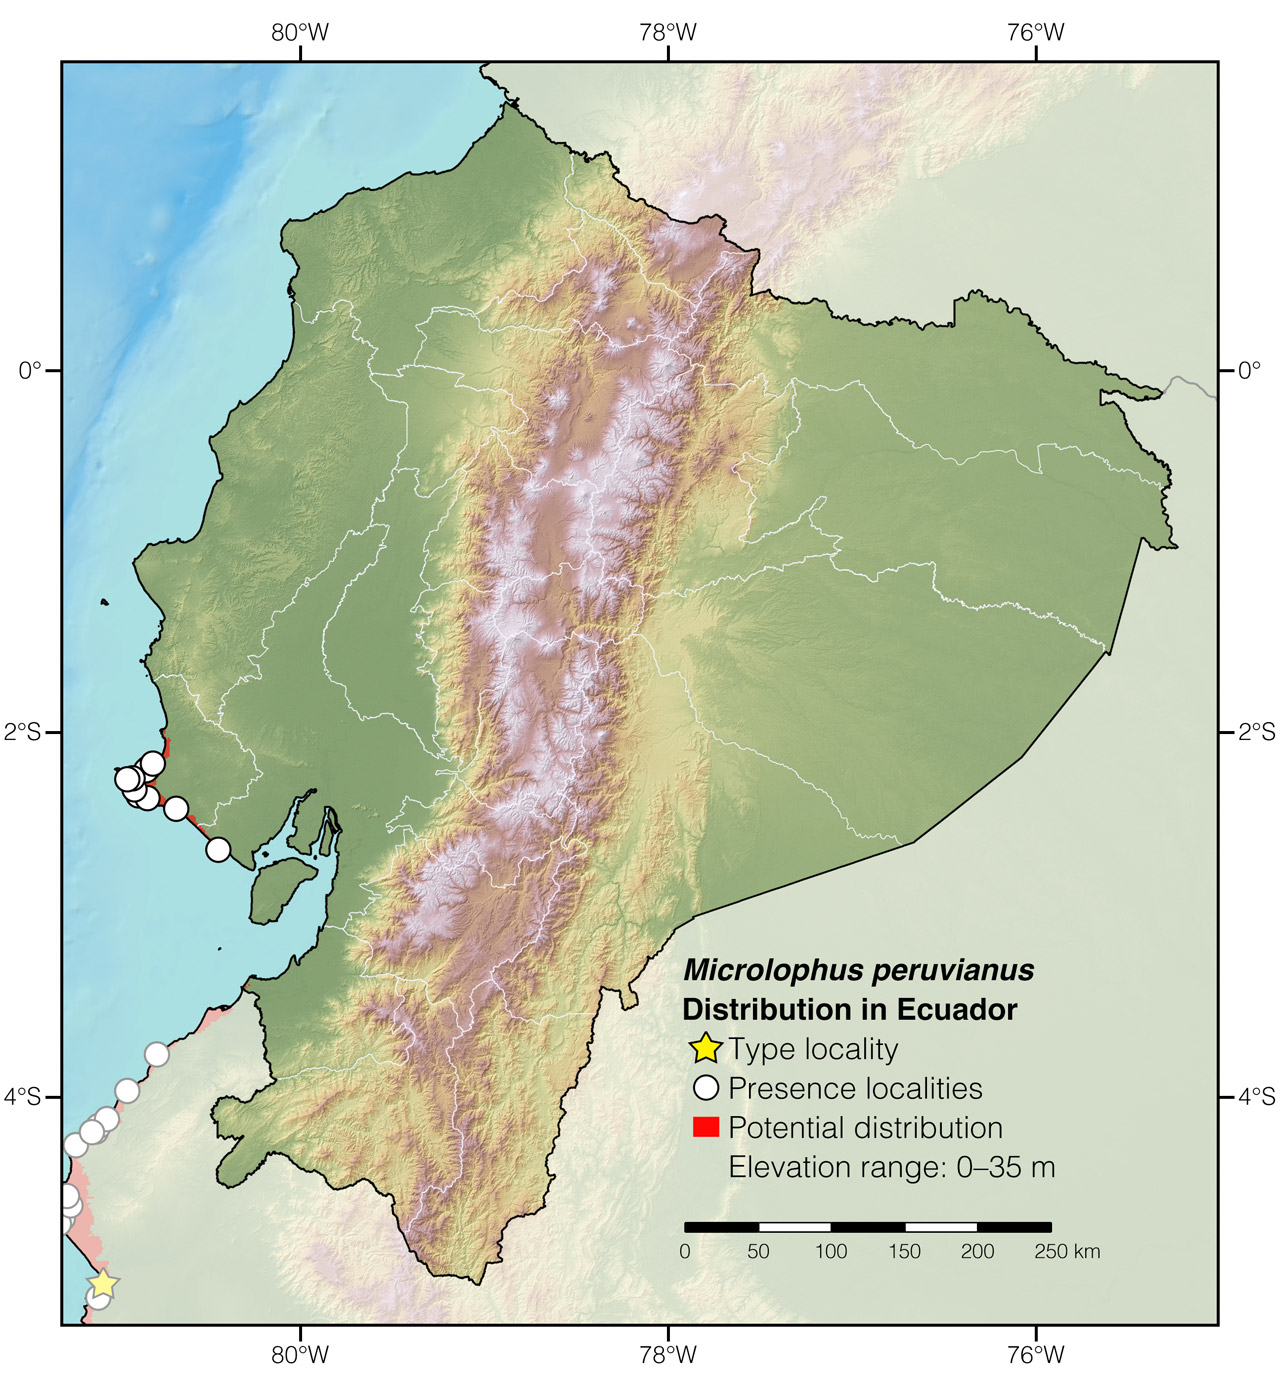 Distribution of Microlophus peruvianus in Ecuador